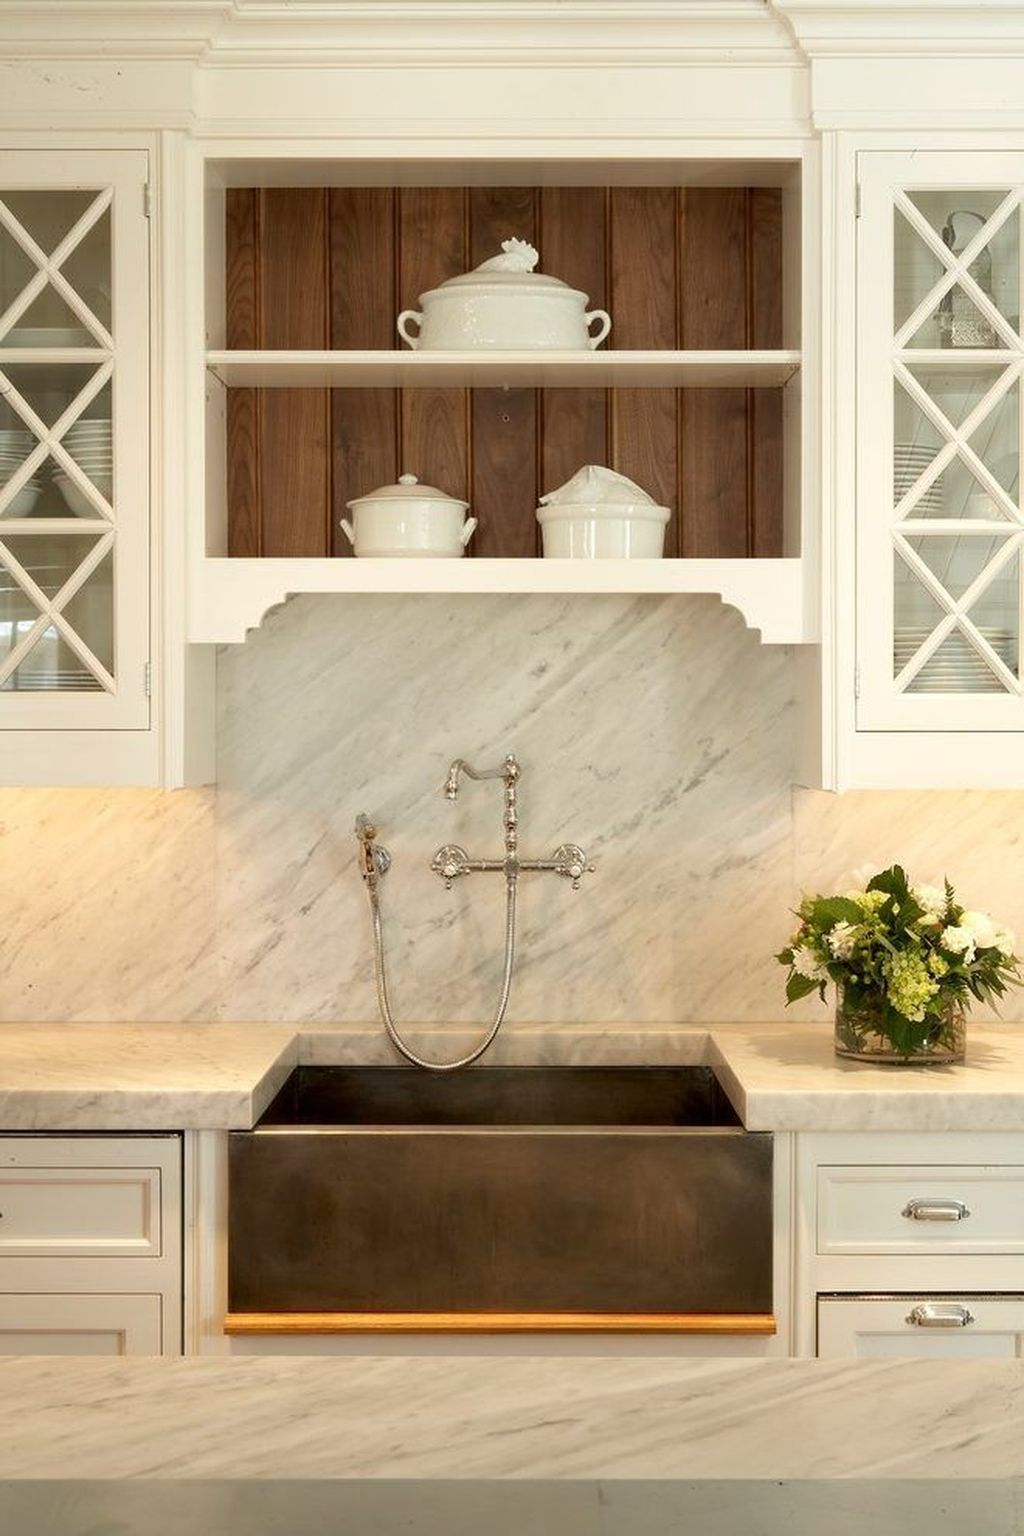 Charming Kitchen Cabinet Decorating Ideas10